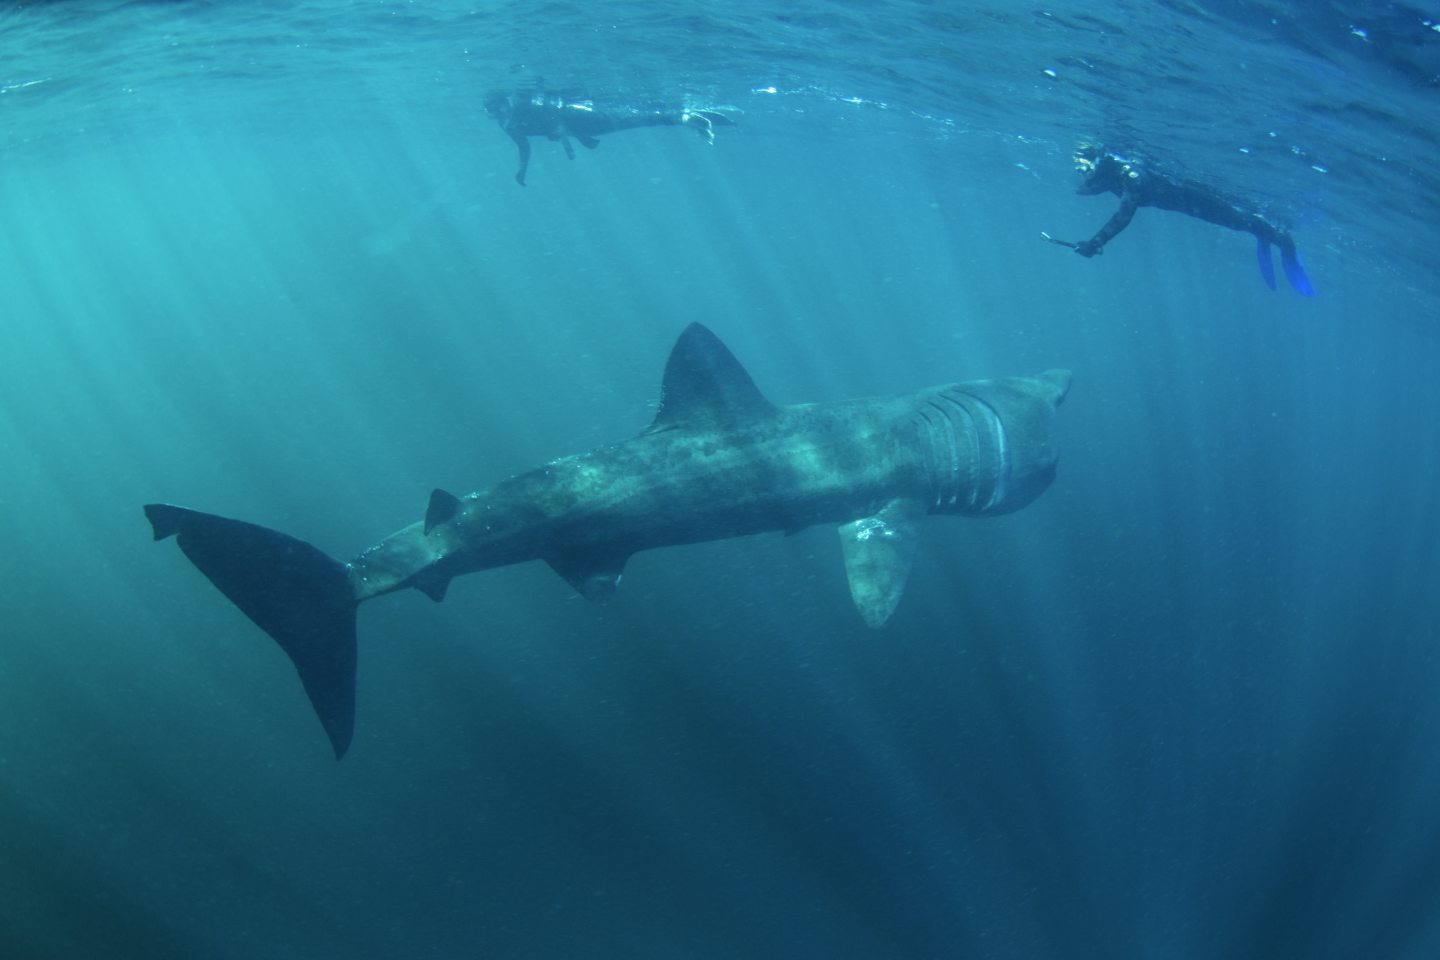 A basking shark in the Scottish seas